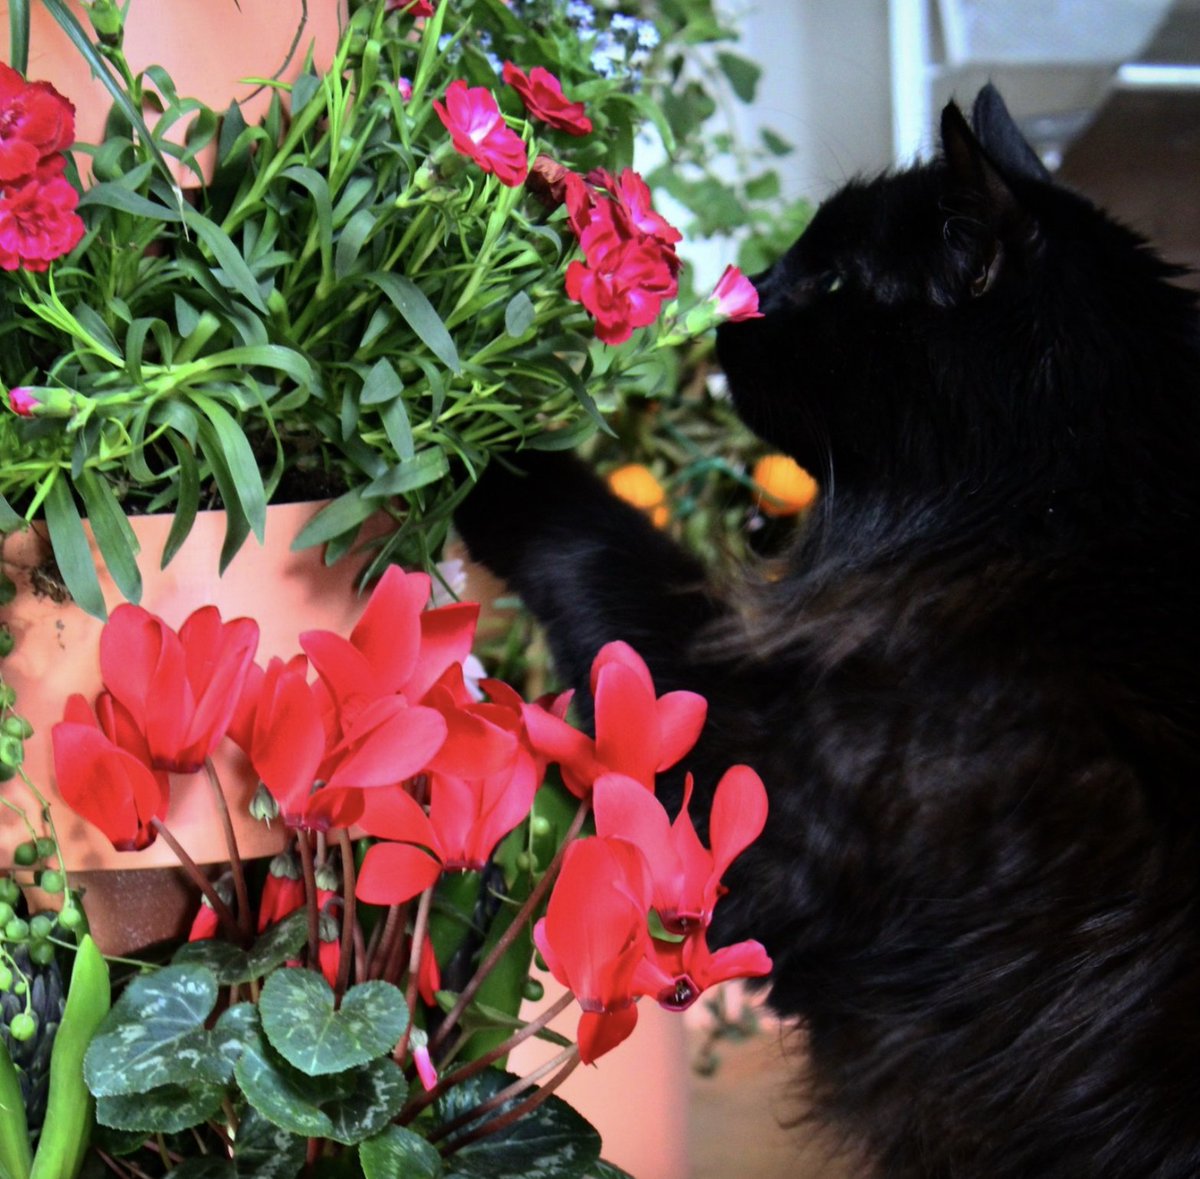 When your cat approves of your gardening skills 🐾🌸👍 #GardenStack #VerticalGarden #HomeGardening #IndoorGarden #CatApproved #FlowerPower #GreenThumb #InstaGarden #GardenInspiration #PetFriendly #HappyHome #FreshProduce #HealthierLiving